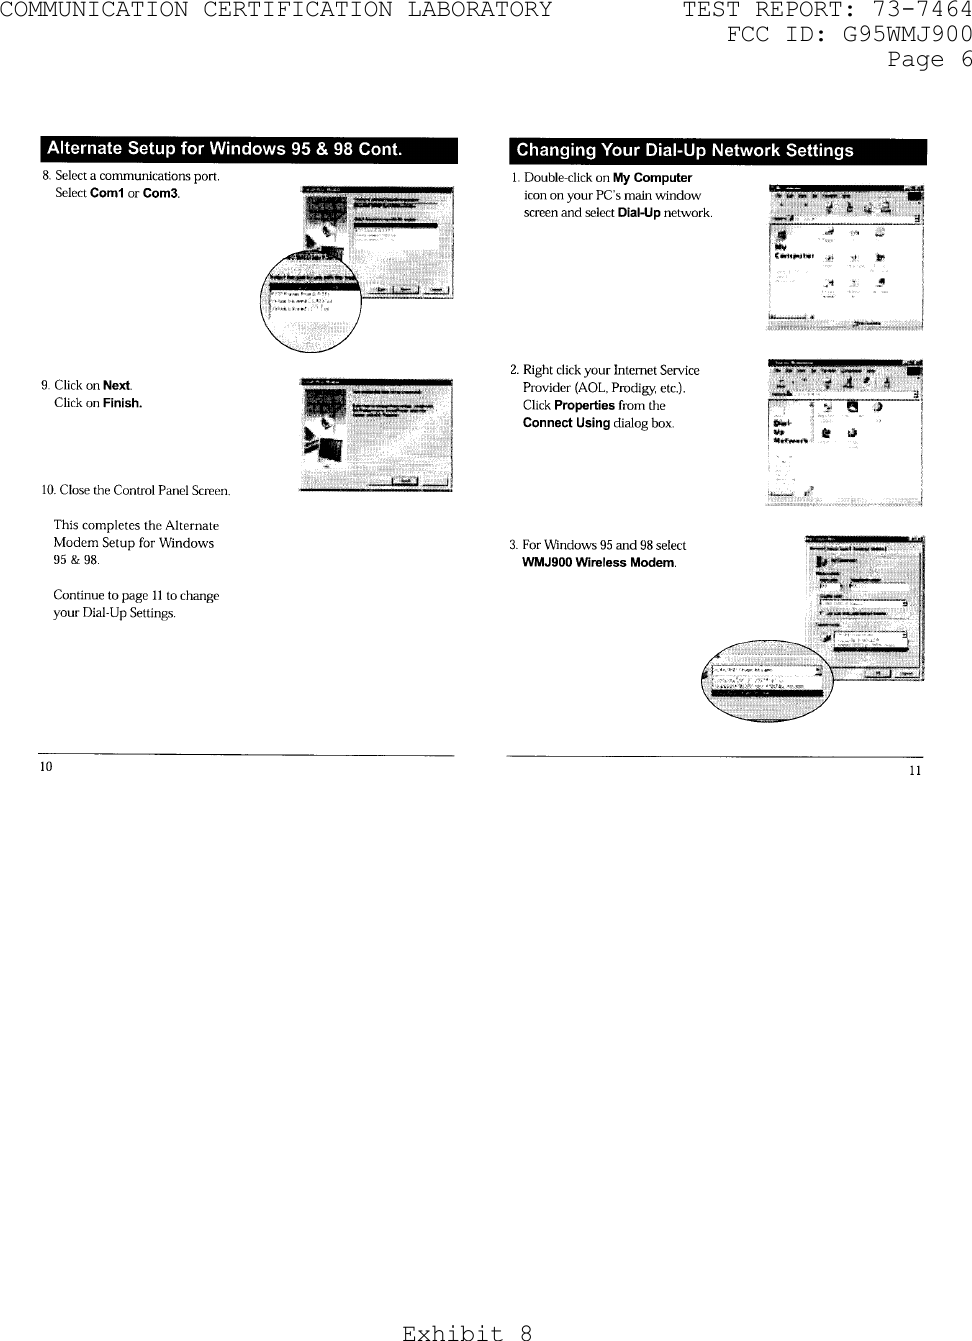 COMMUNICATION CERTIFICATION LABORATORY  TEST REPORT: 73-7464     FCC ID: G95WMJ900   Page 6 Exhibit 8    